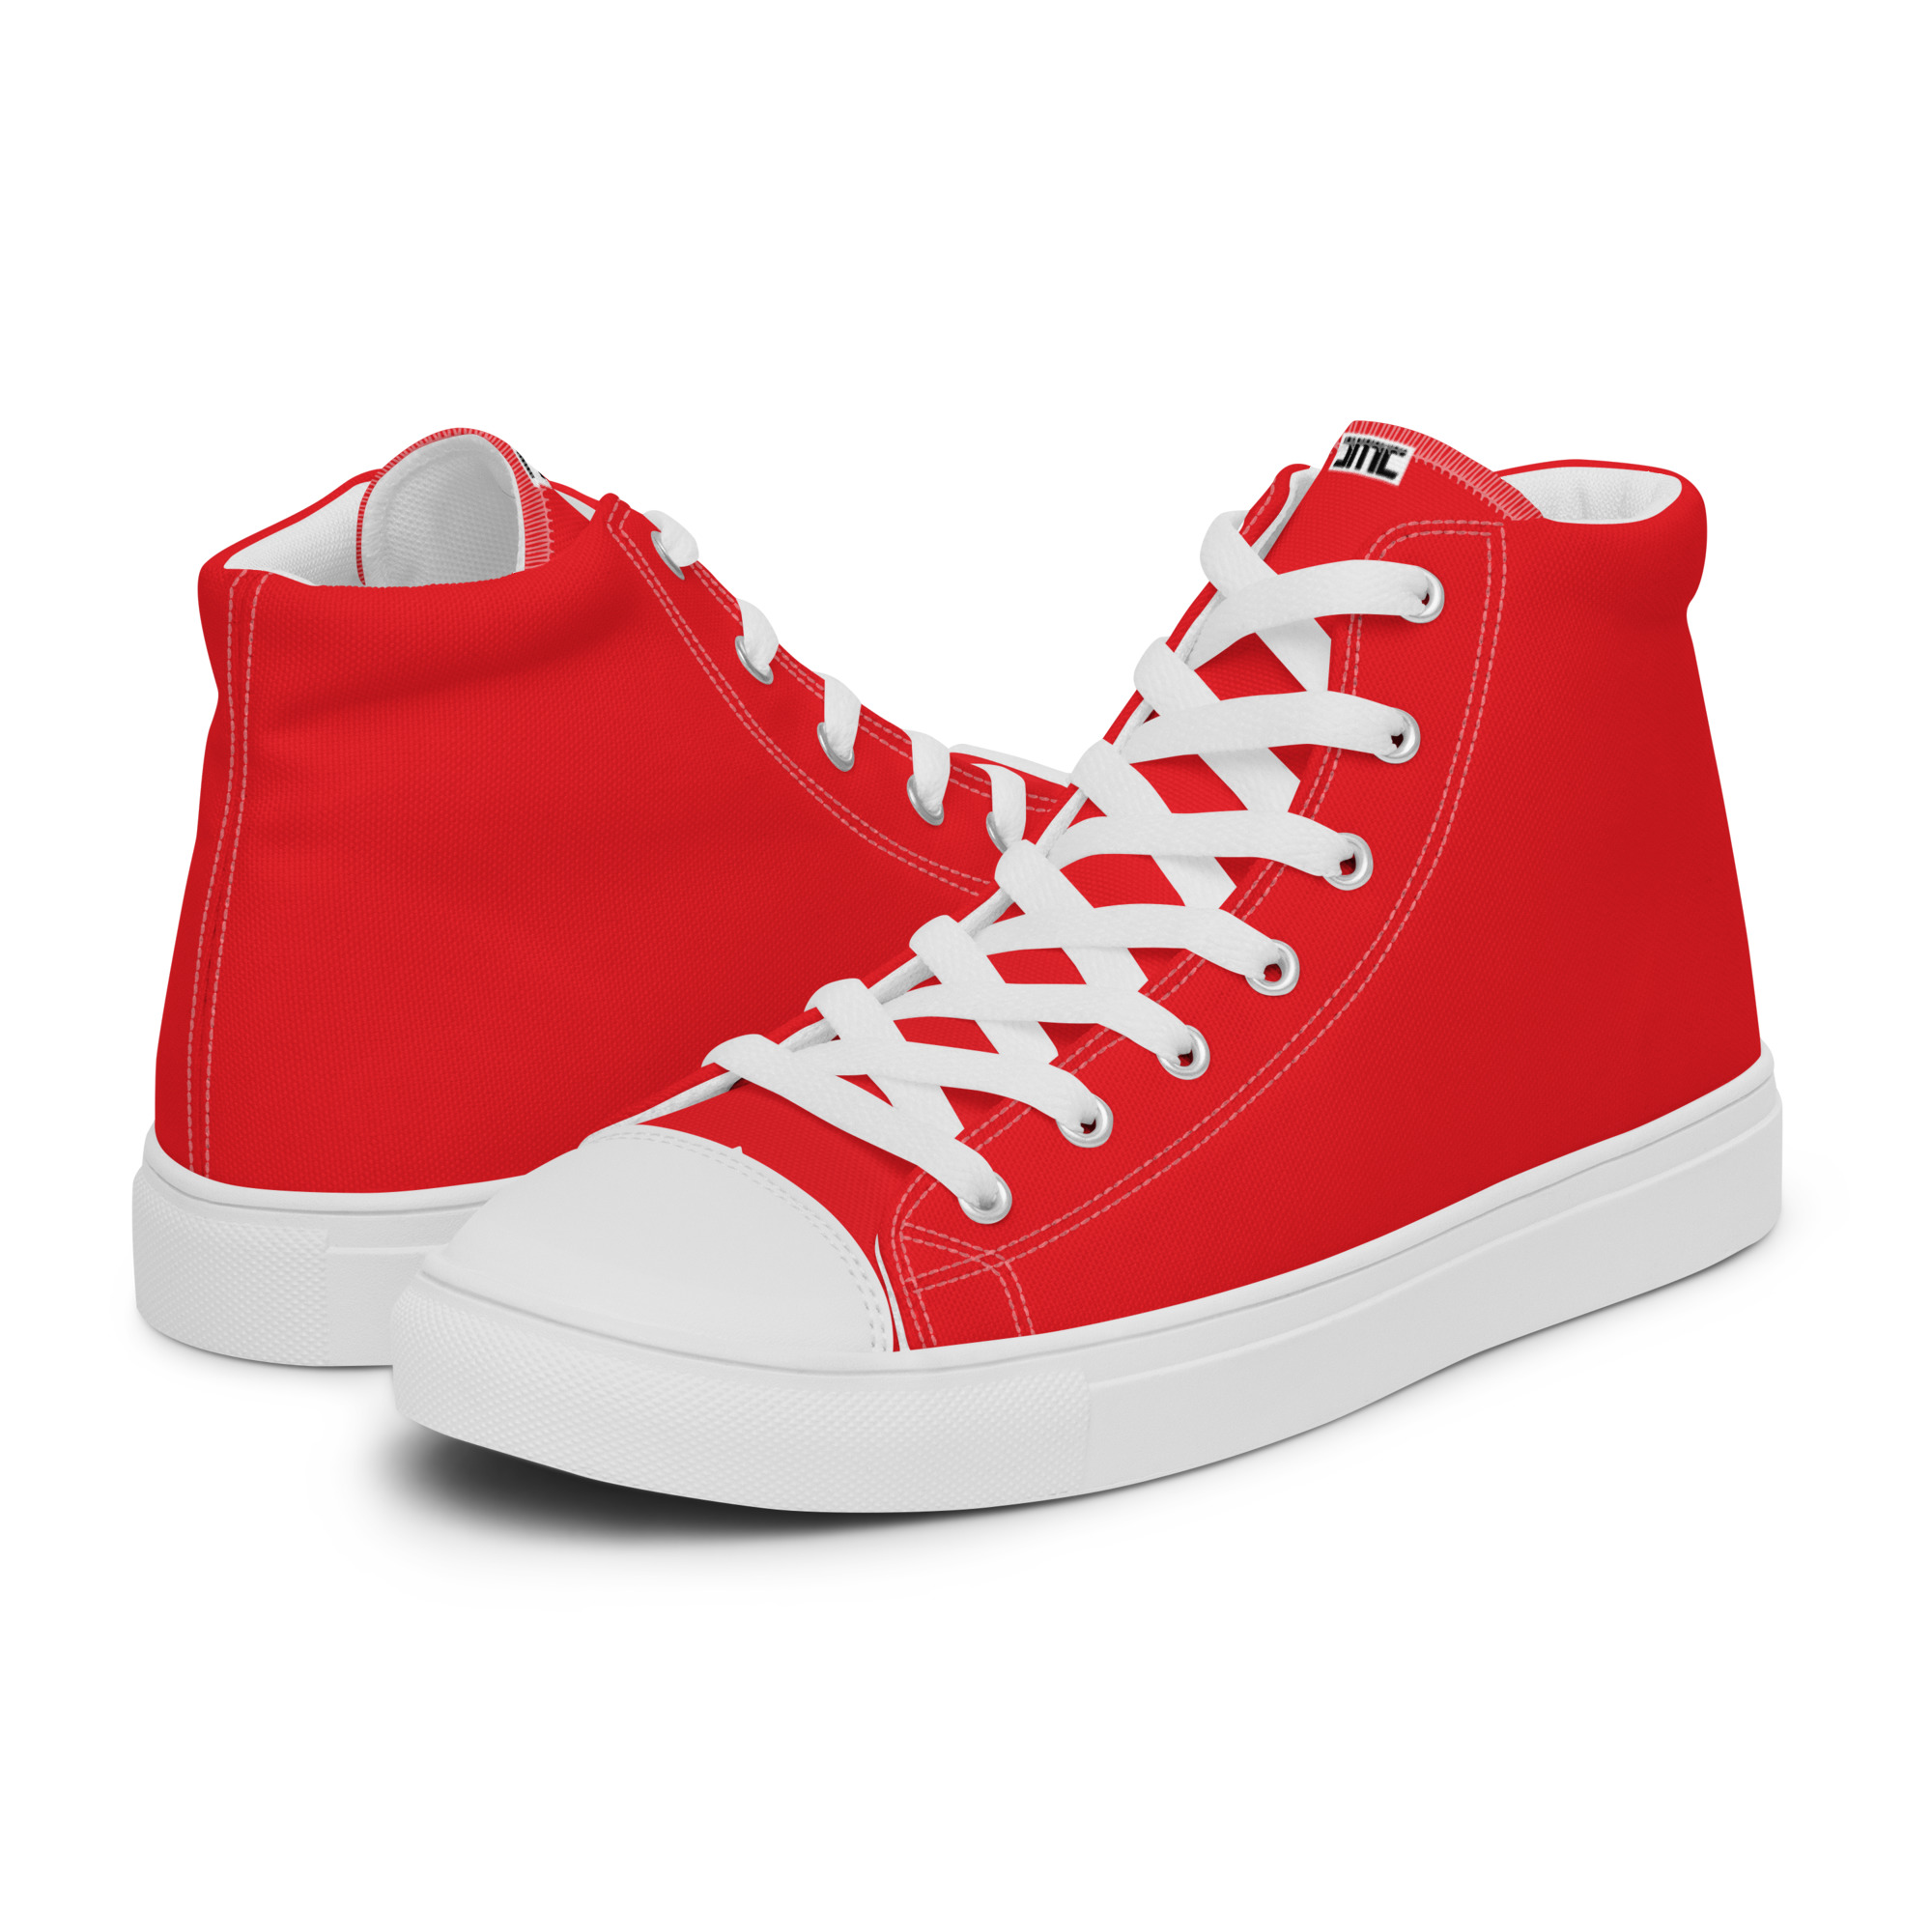 Buy Benton Women's Red/White Canvas Sneakers - 5 UK at Amazon.in